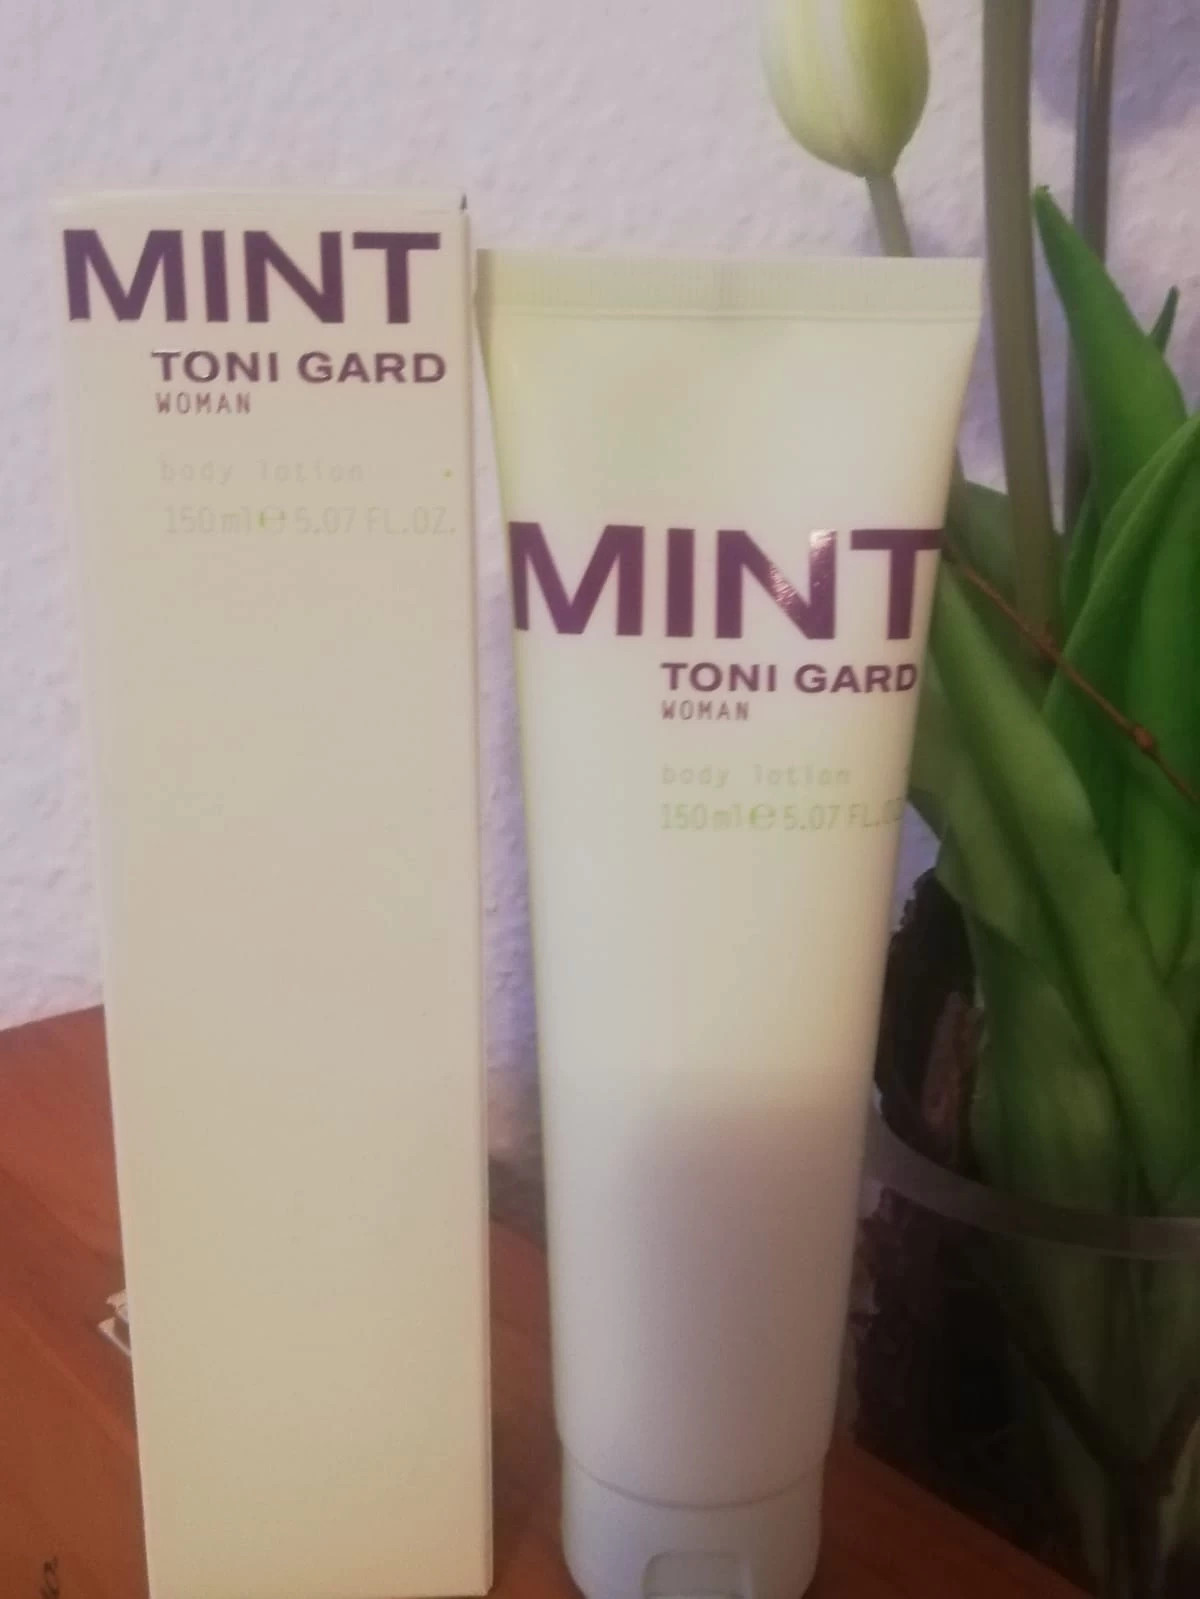 Vinted Toni Mint Gard 150ml | Bodylotion OVP